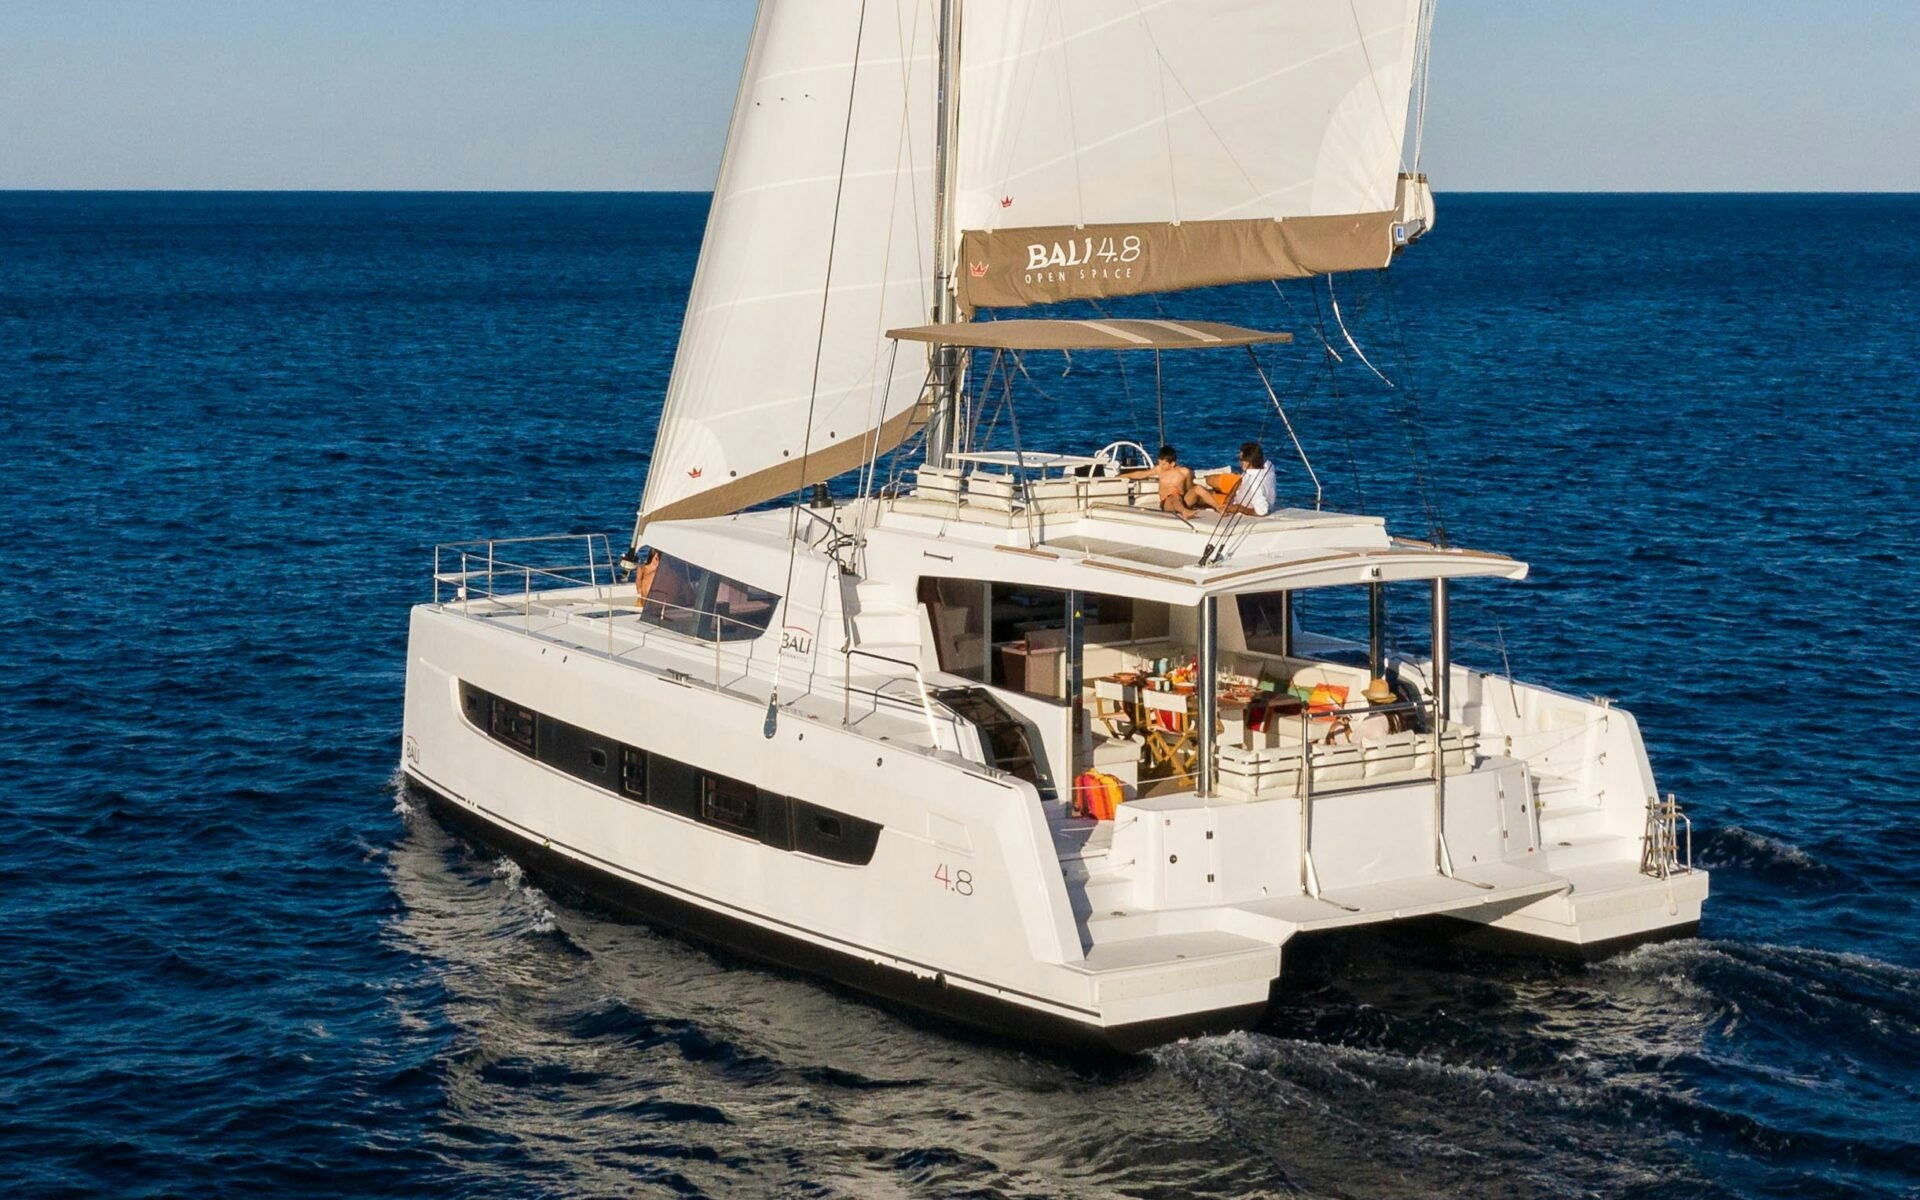 choose the Bali 4.8 catamaran as your new boat